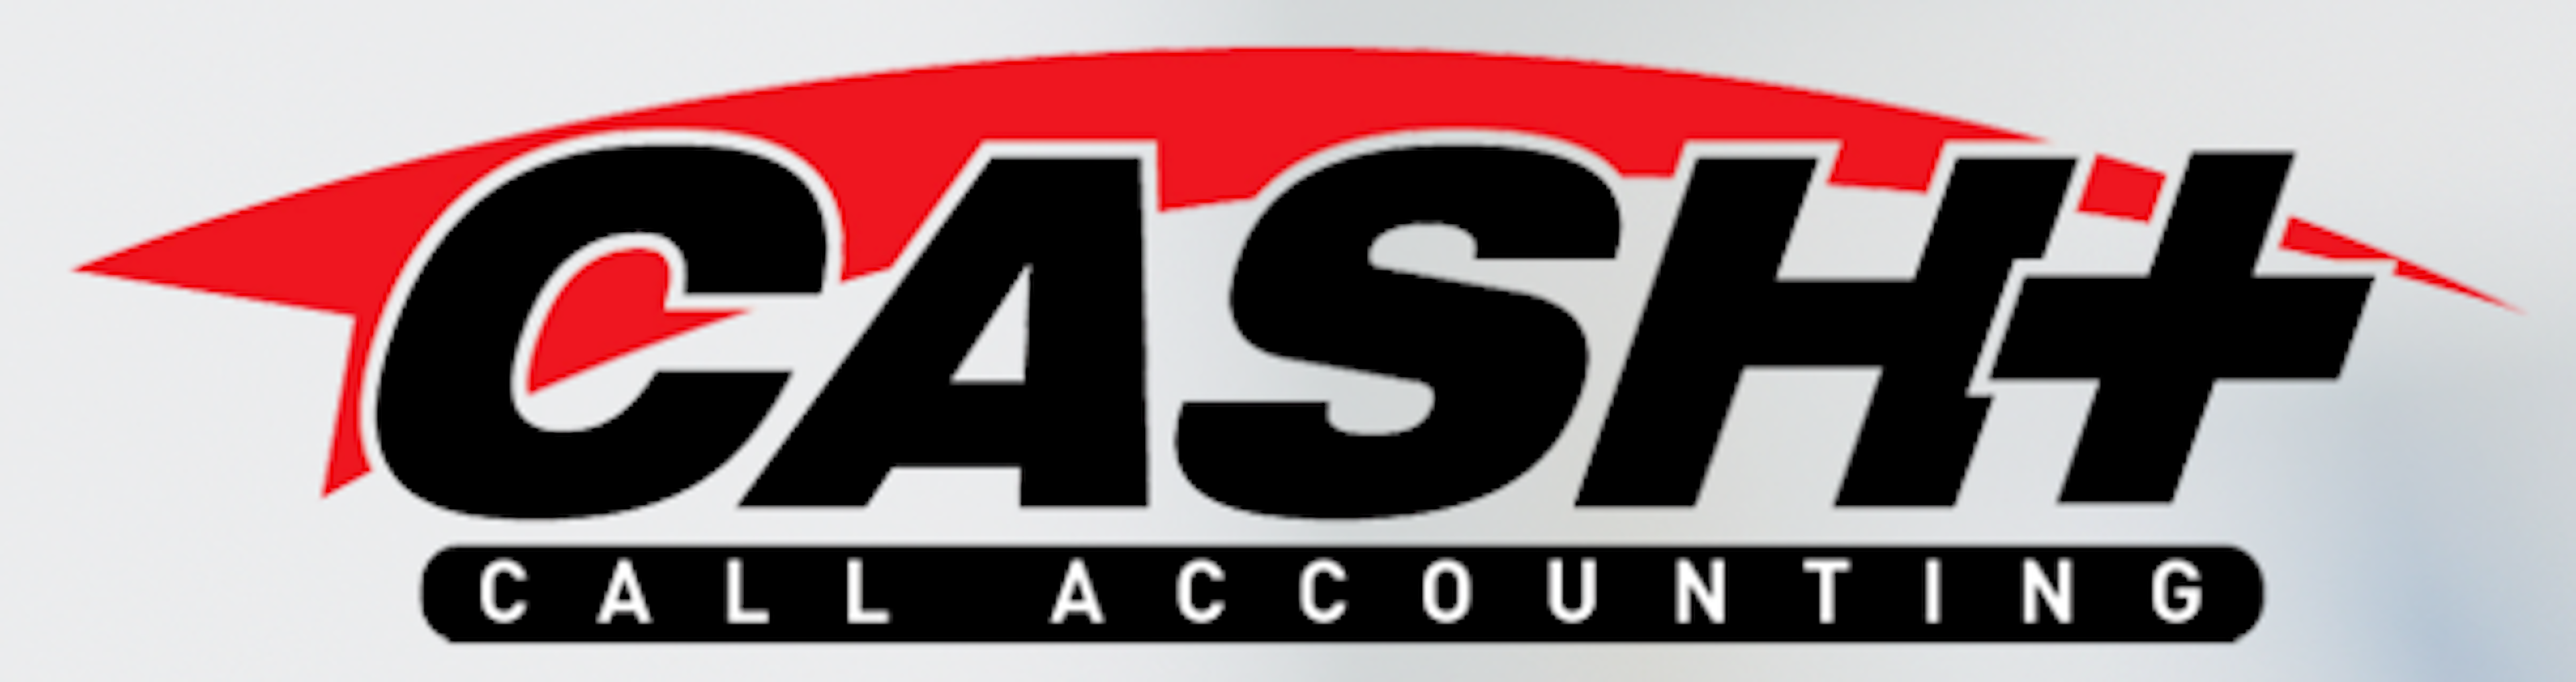 CASH+ Call Accounting Software Logo